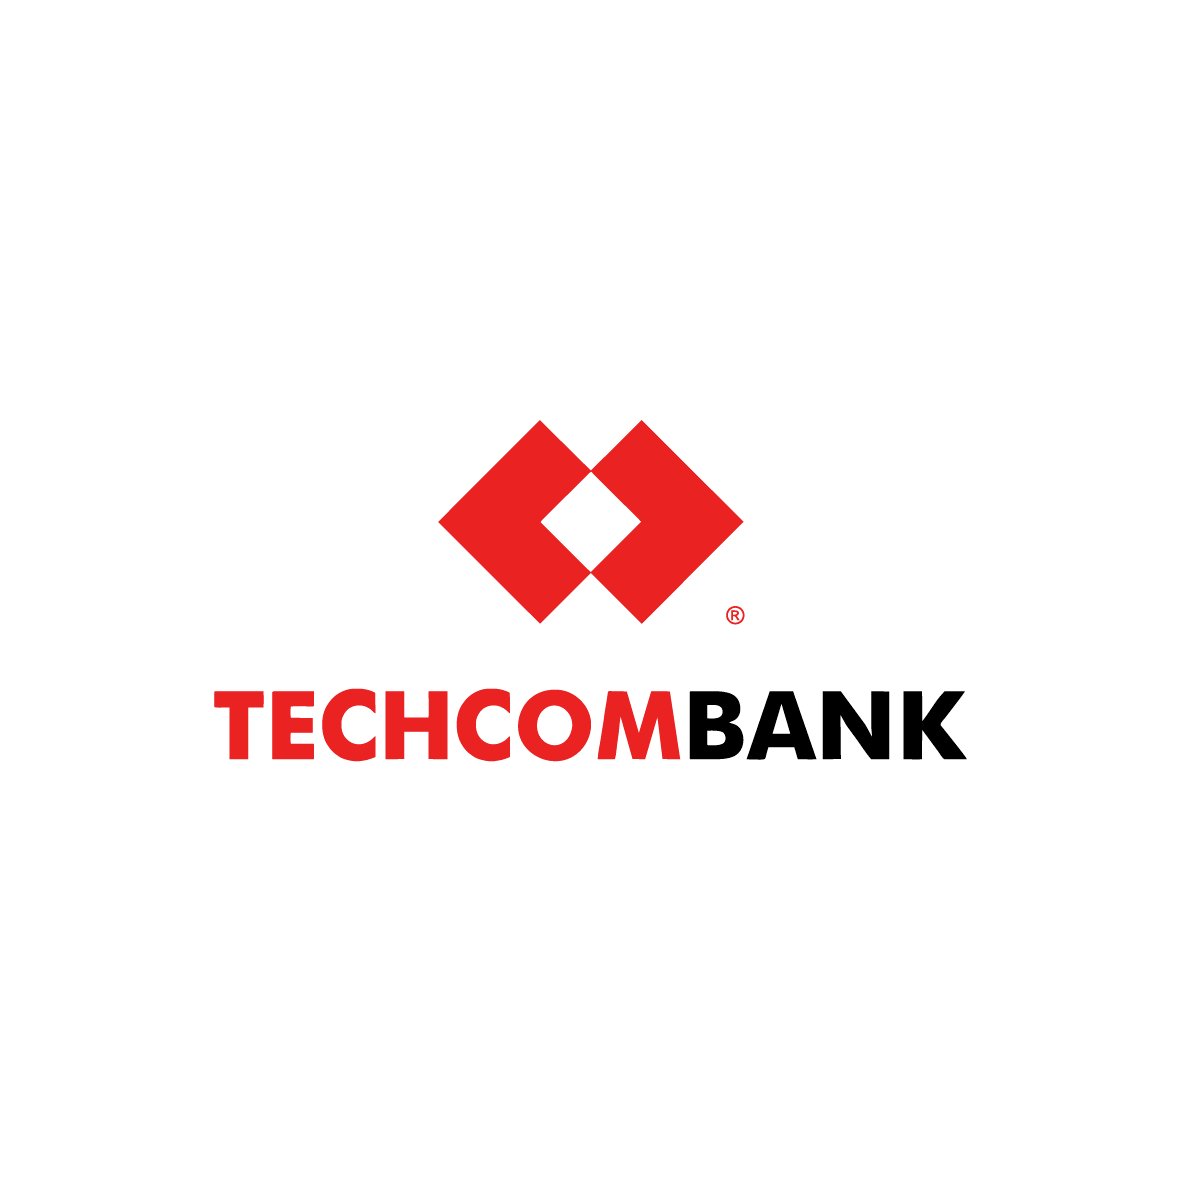 Tải logo Techcombank PNG, vector, CDR, AI, EPS, SVG, PDF ...